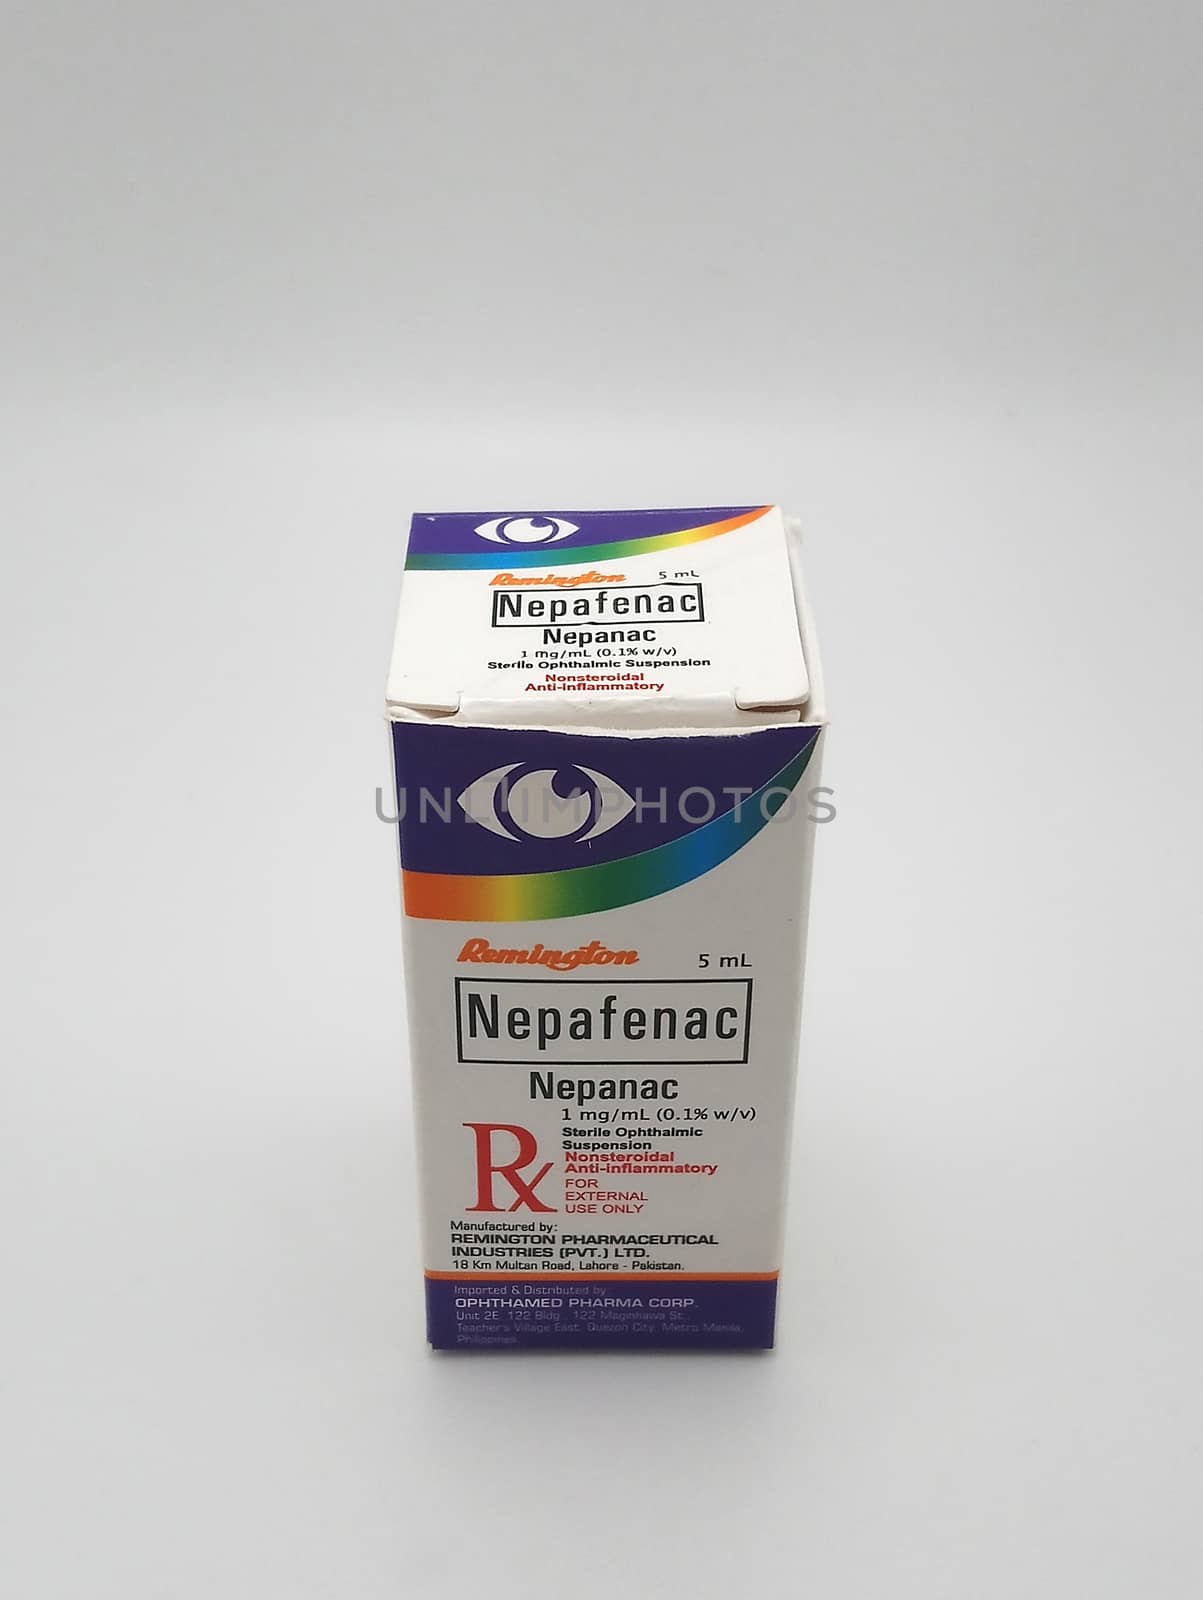 Nepafenac nepanac sterile opthalmic suspension drops box in Mani by imwaltersy